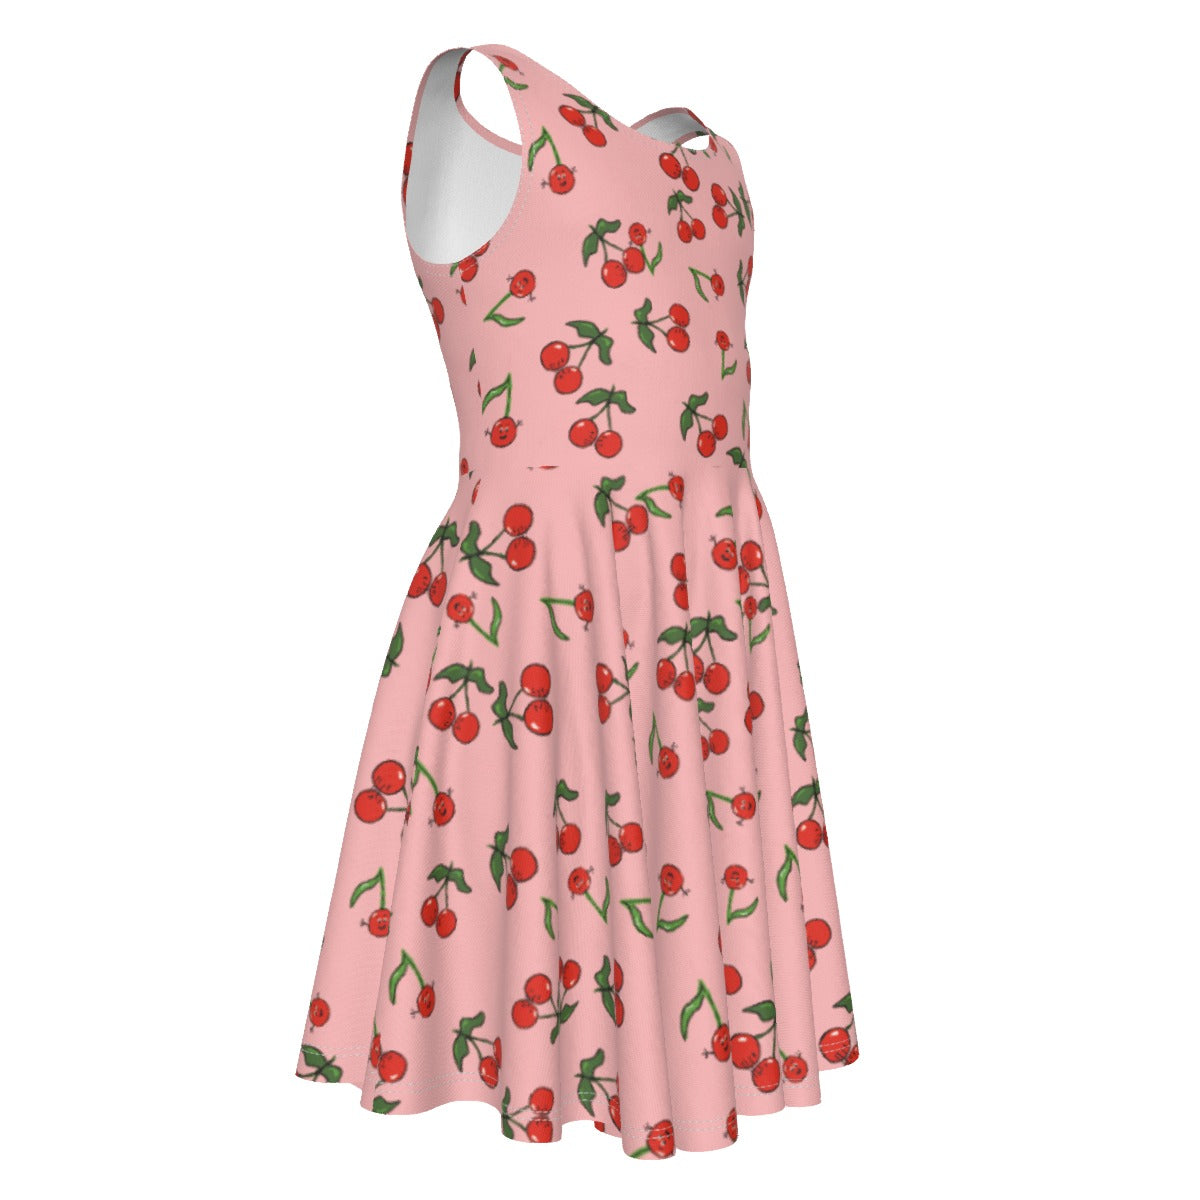 Girls Cherry Dress - Clothes that Calm